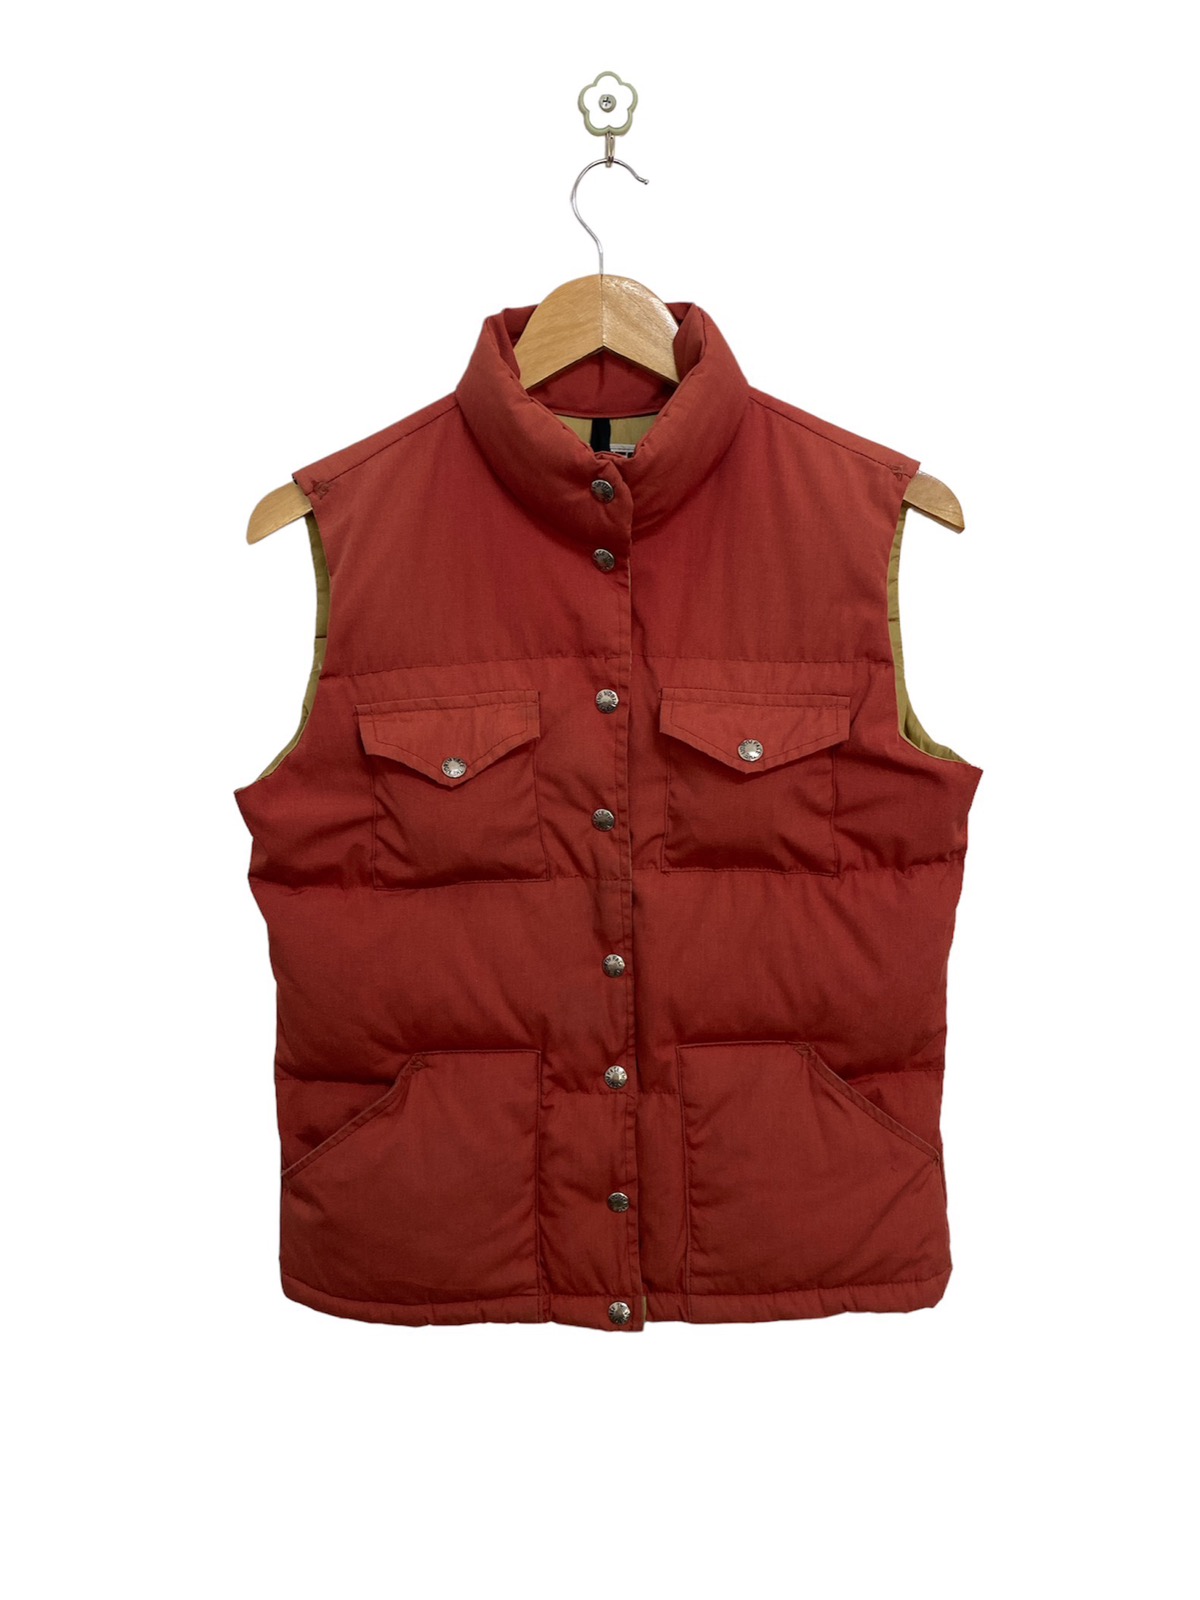 Vintage The North Face Nanamica Puffer Down Vest Jacket - 1